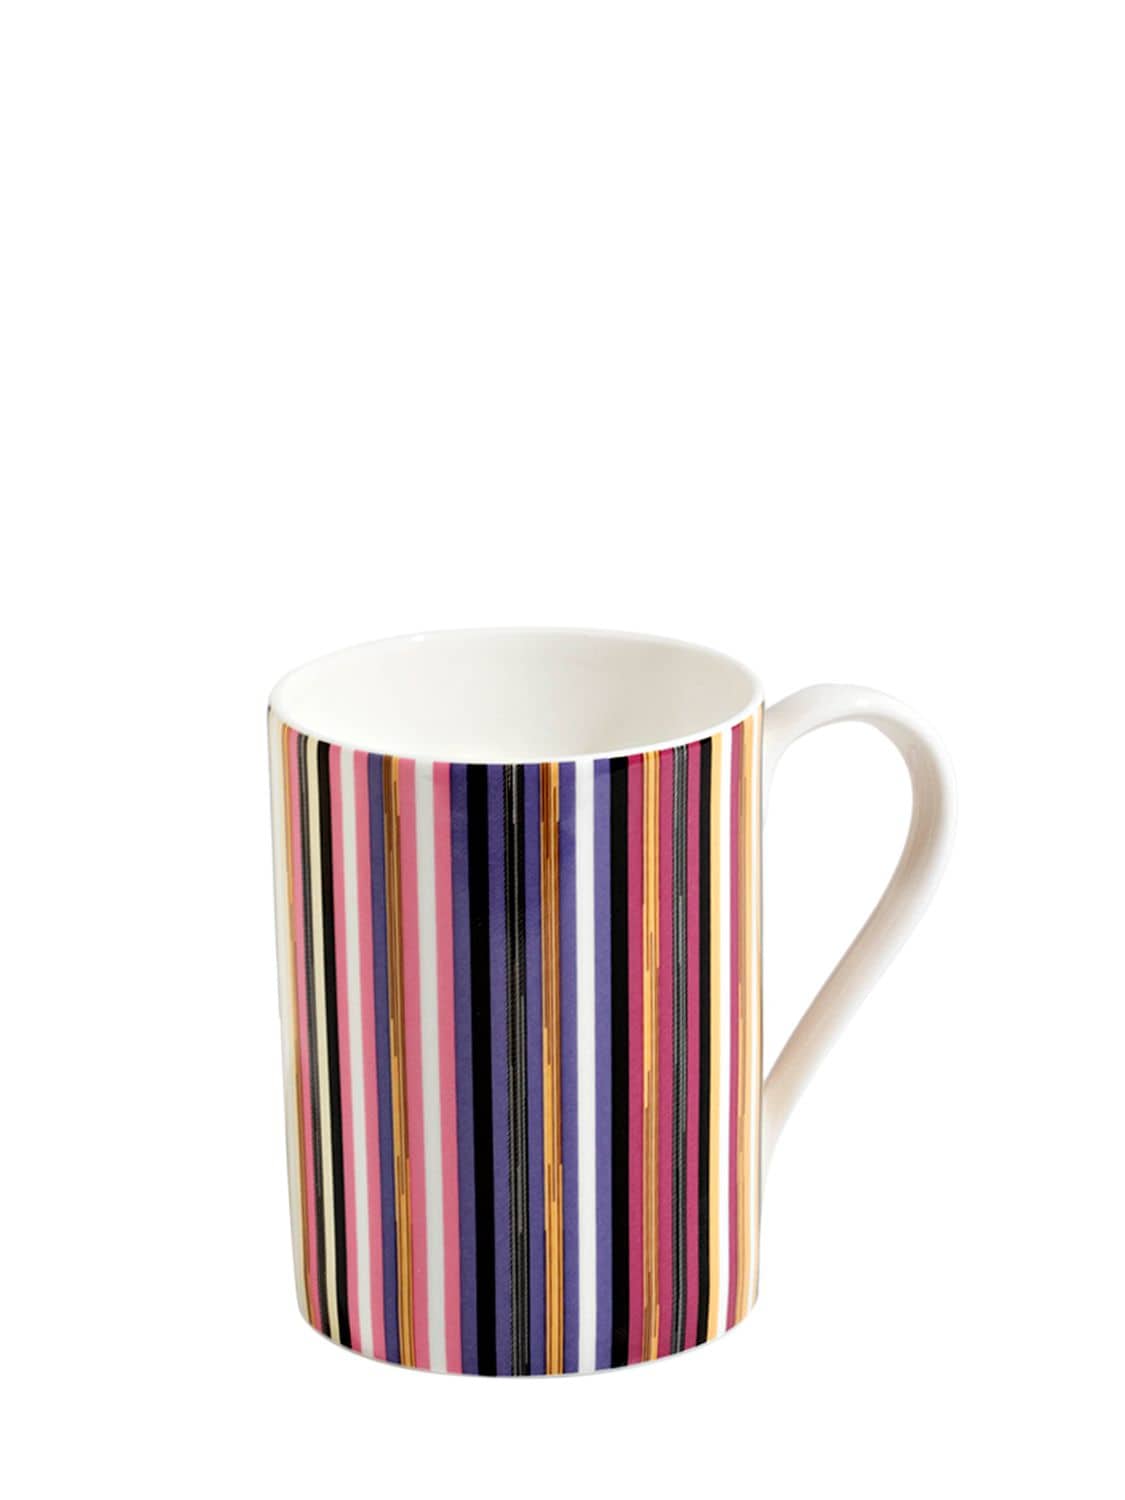 Image of Stripes Jenkins Mug